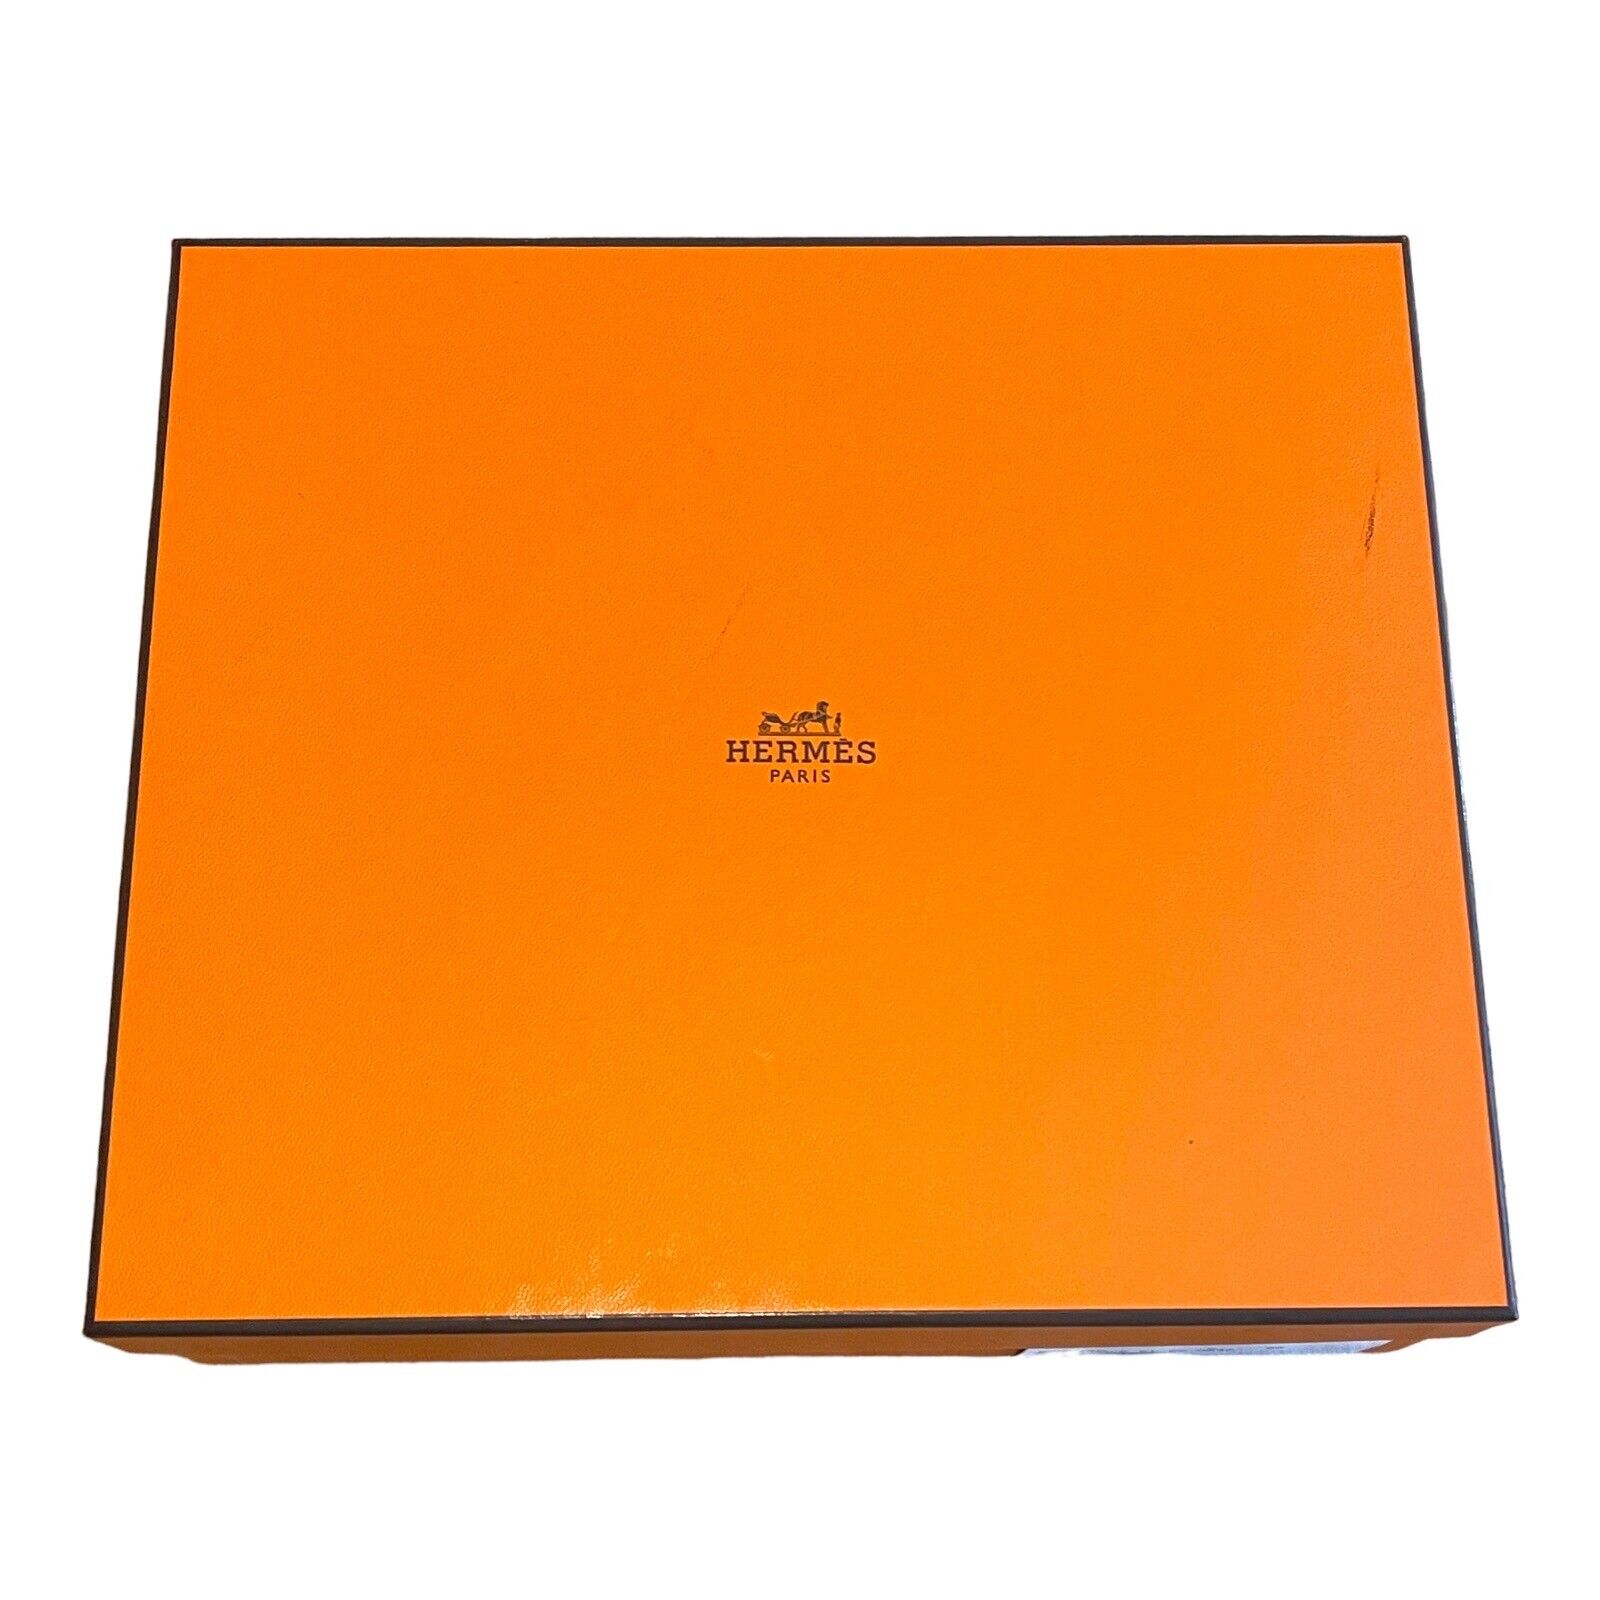 Authentic Hermes Paris Empty Box Orange Plate 12x12”x2.25” Foam Insert Storage